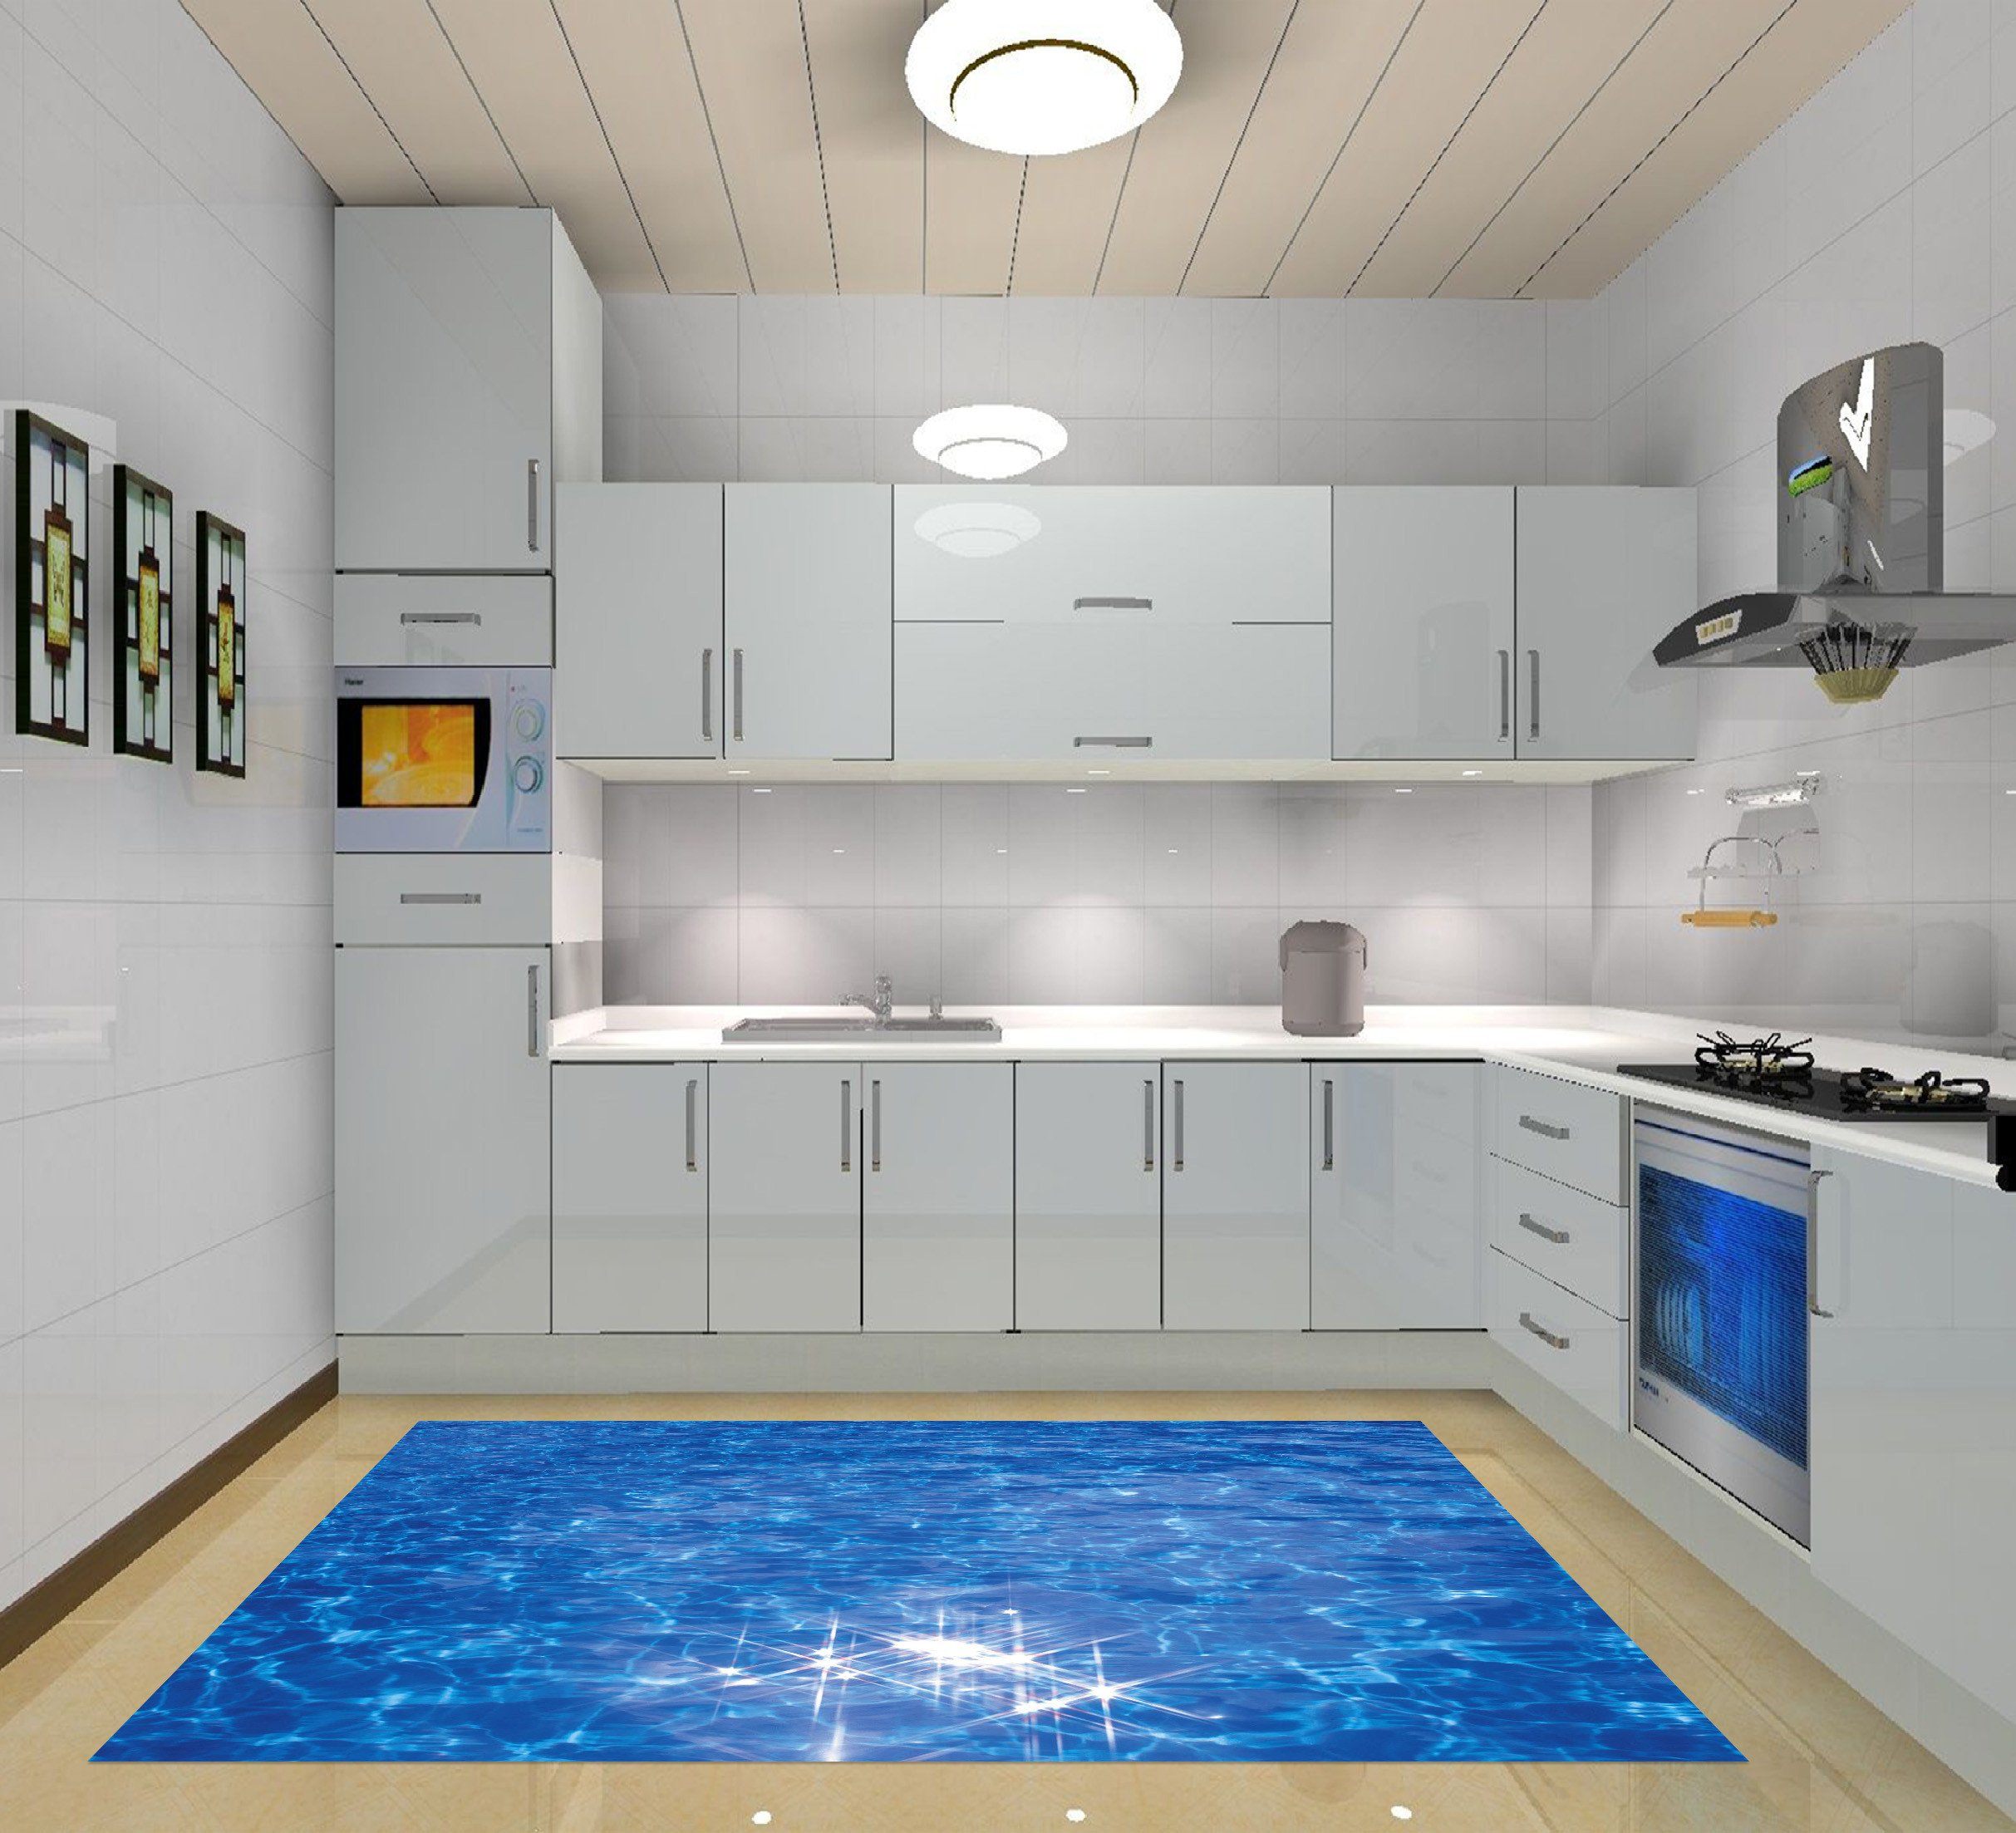 3D Dazzling Blue Sea 061 Kitchen Mat Floor Mural Wallpaper AJ Wallpaper 